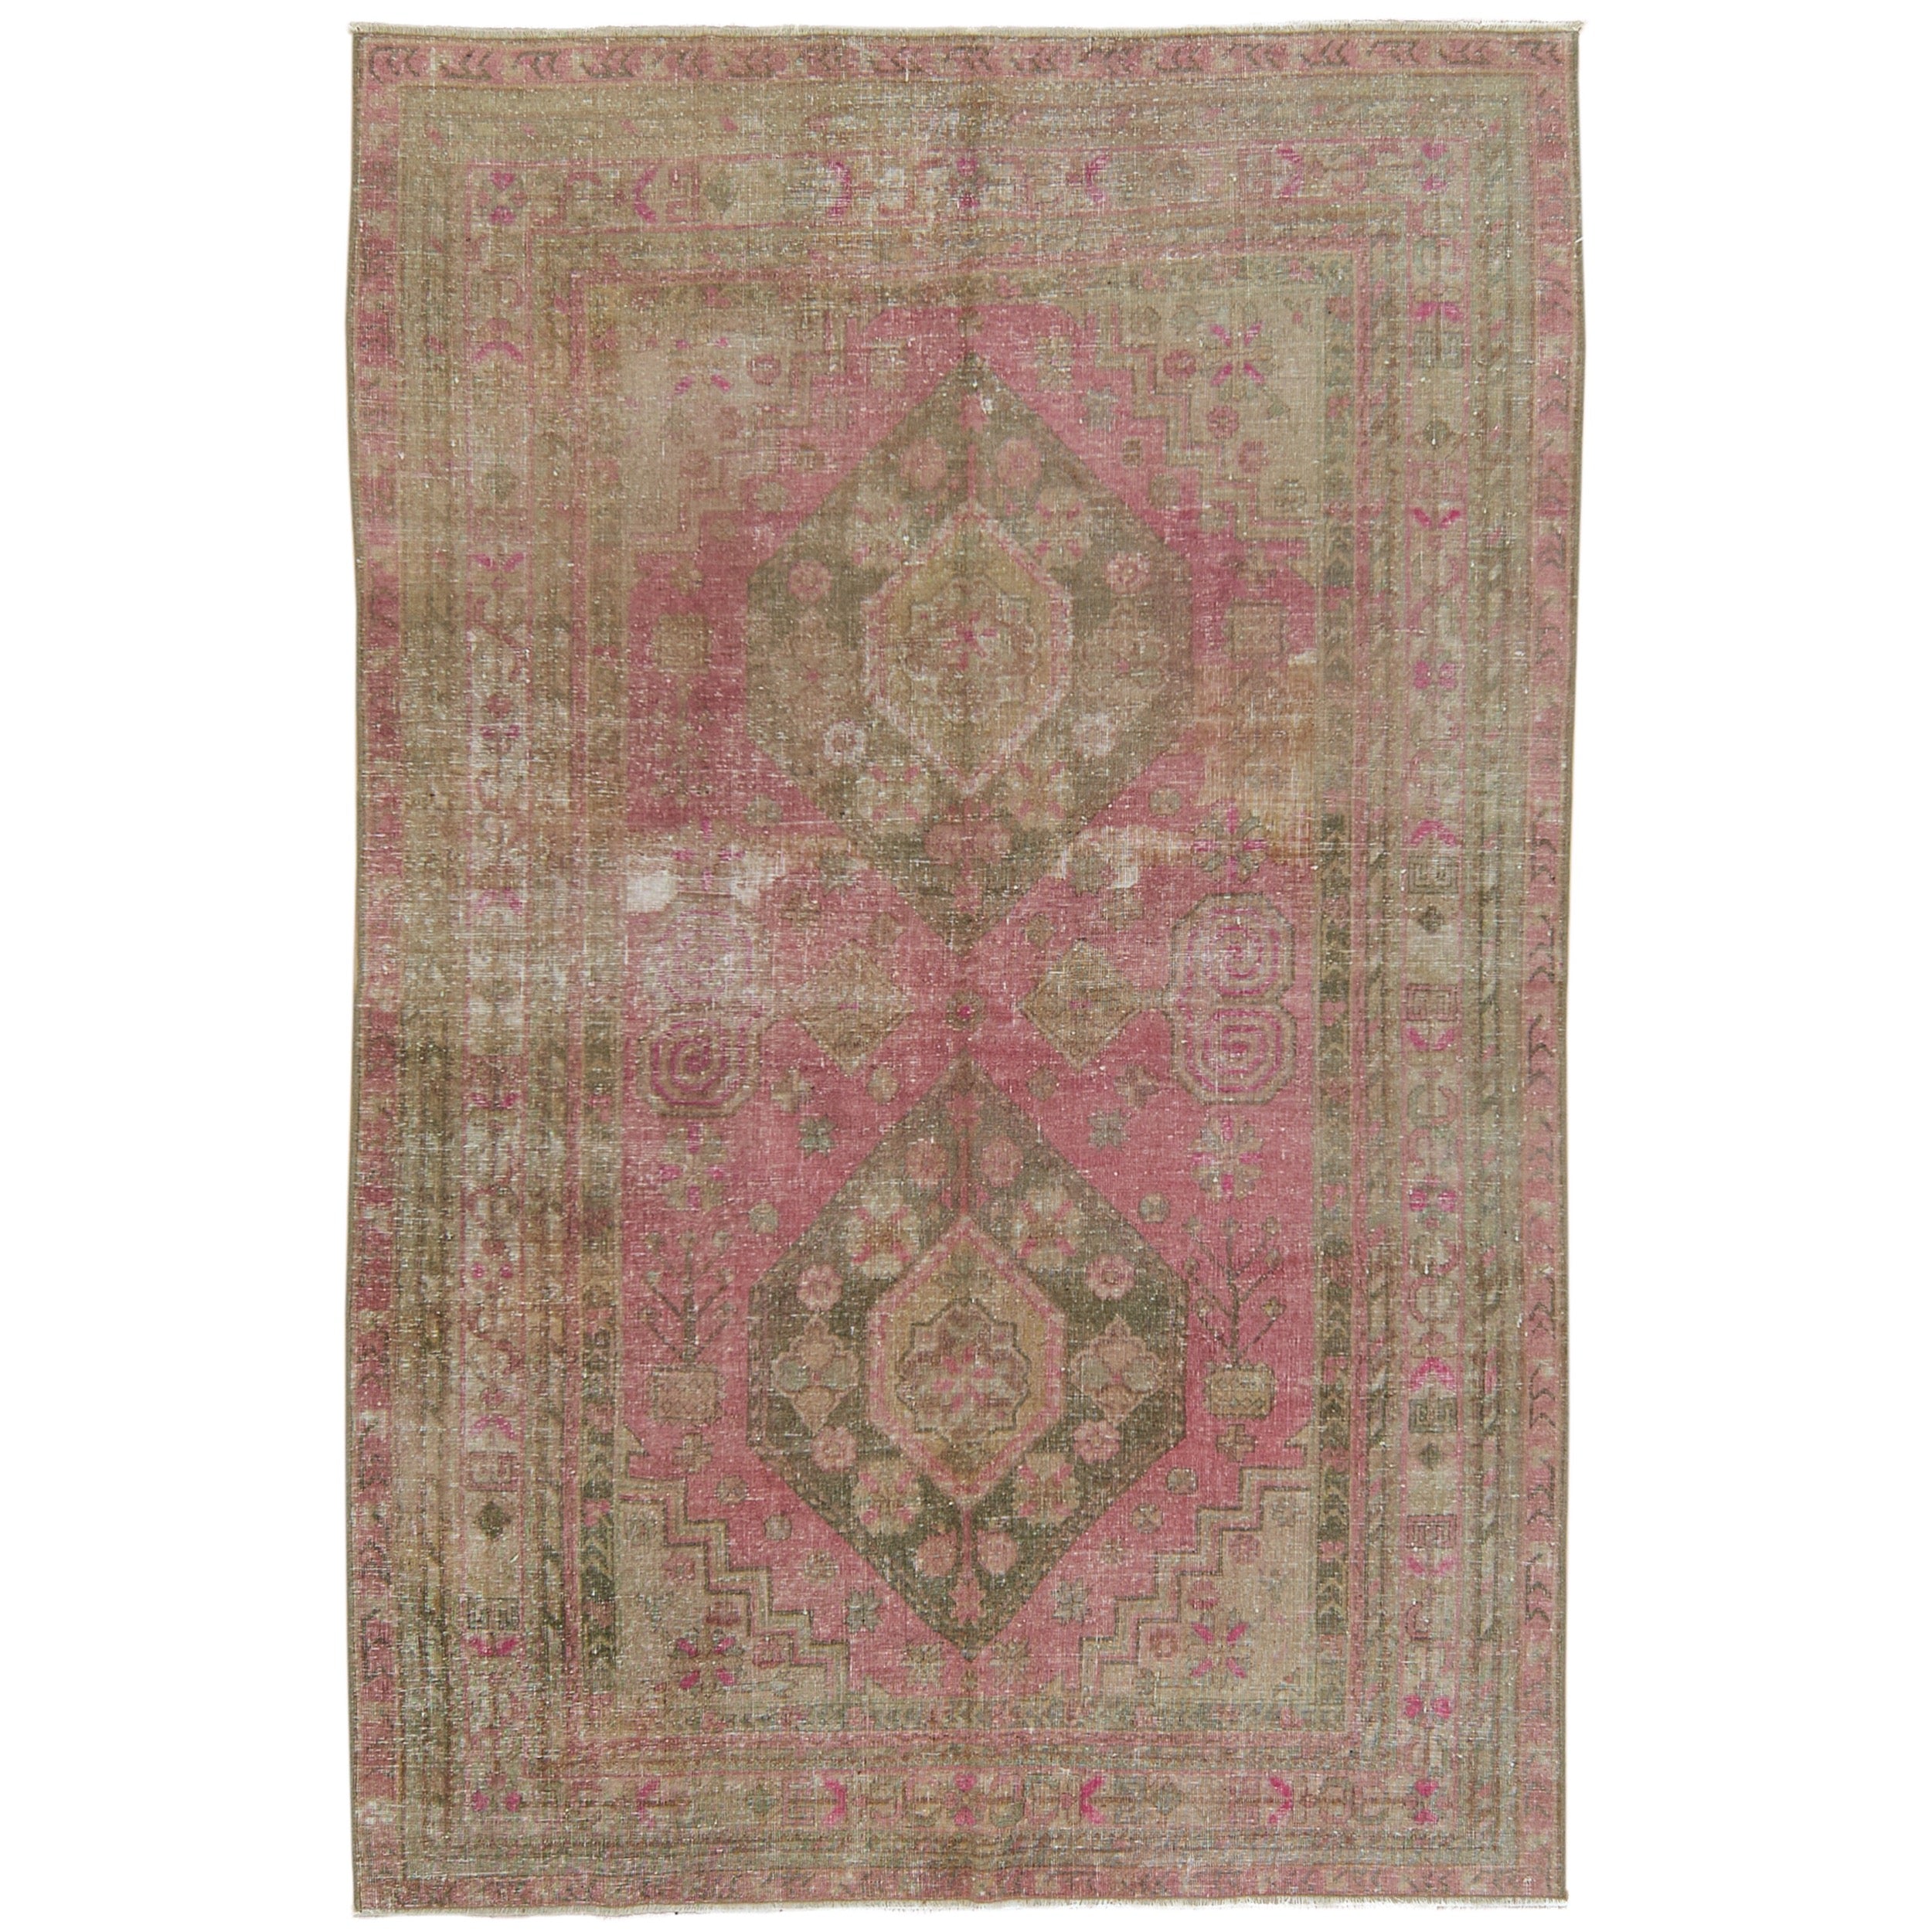 Khloe - Elegance in Persian Weaving | Kuden Rugs